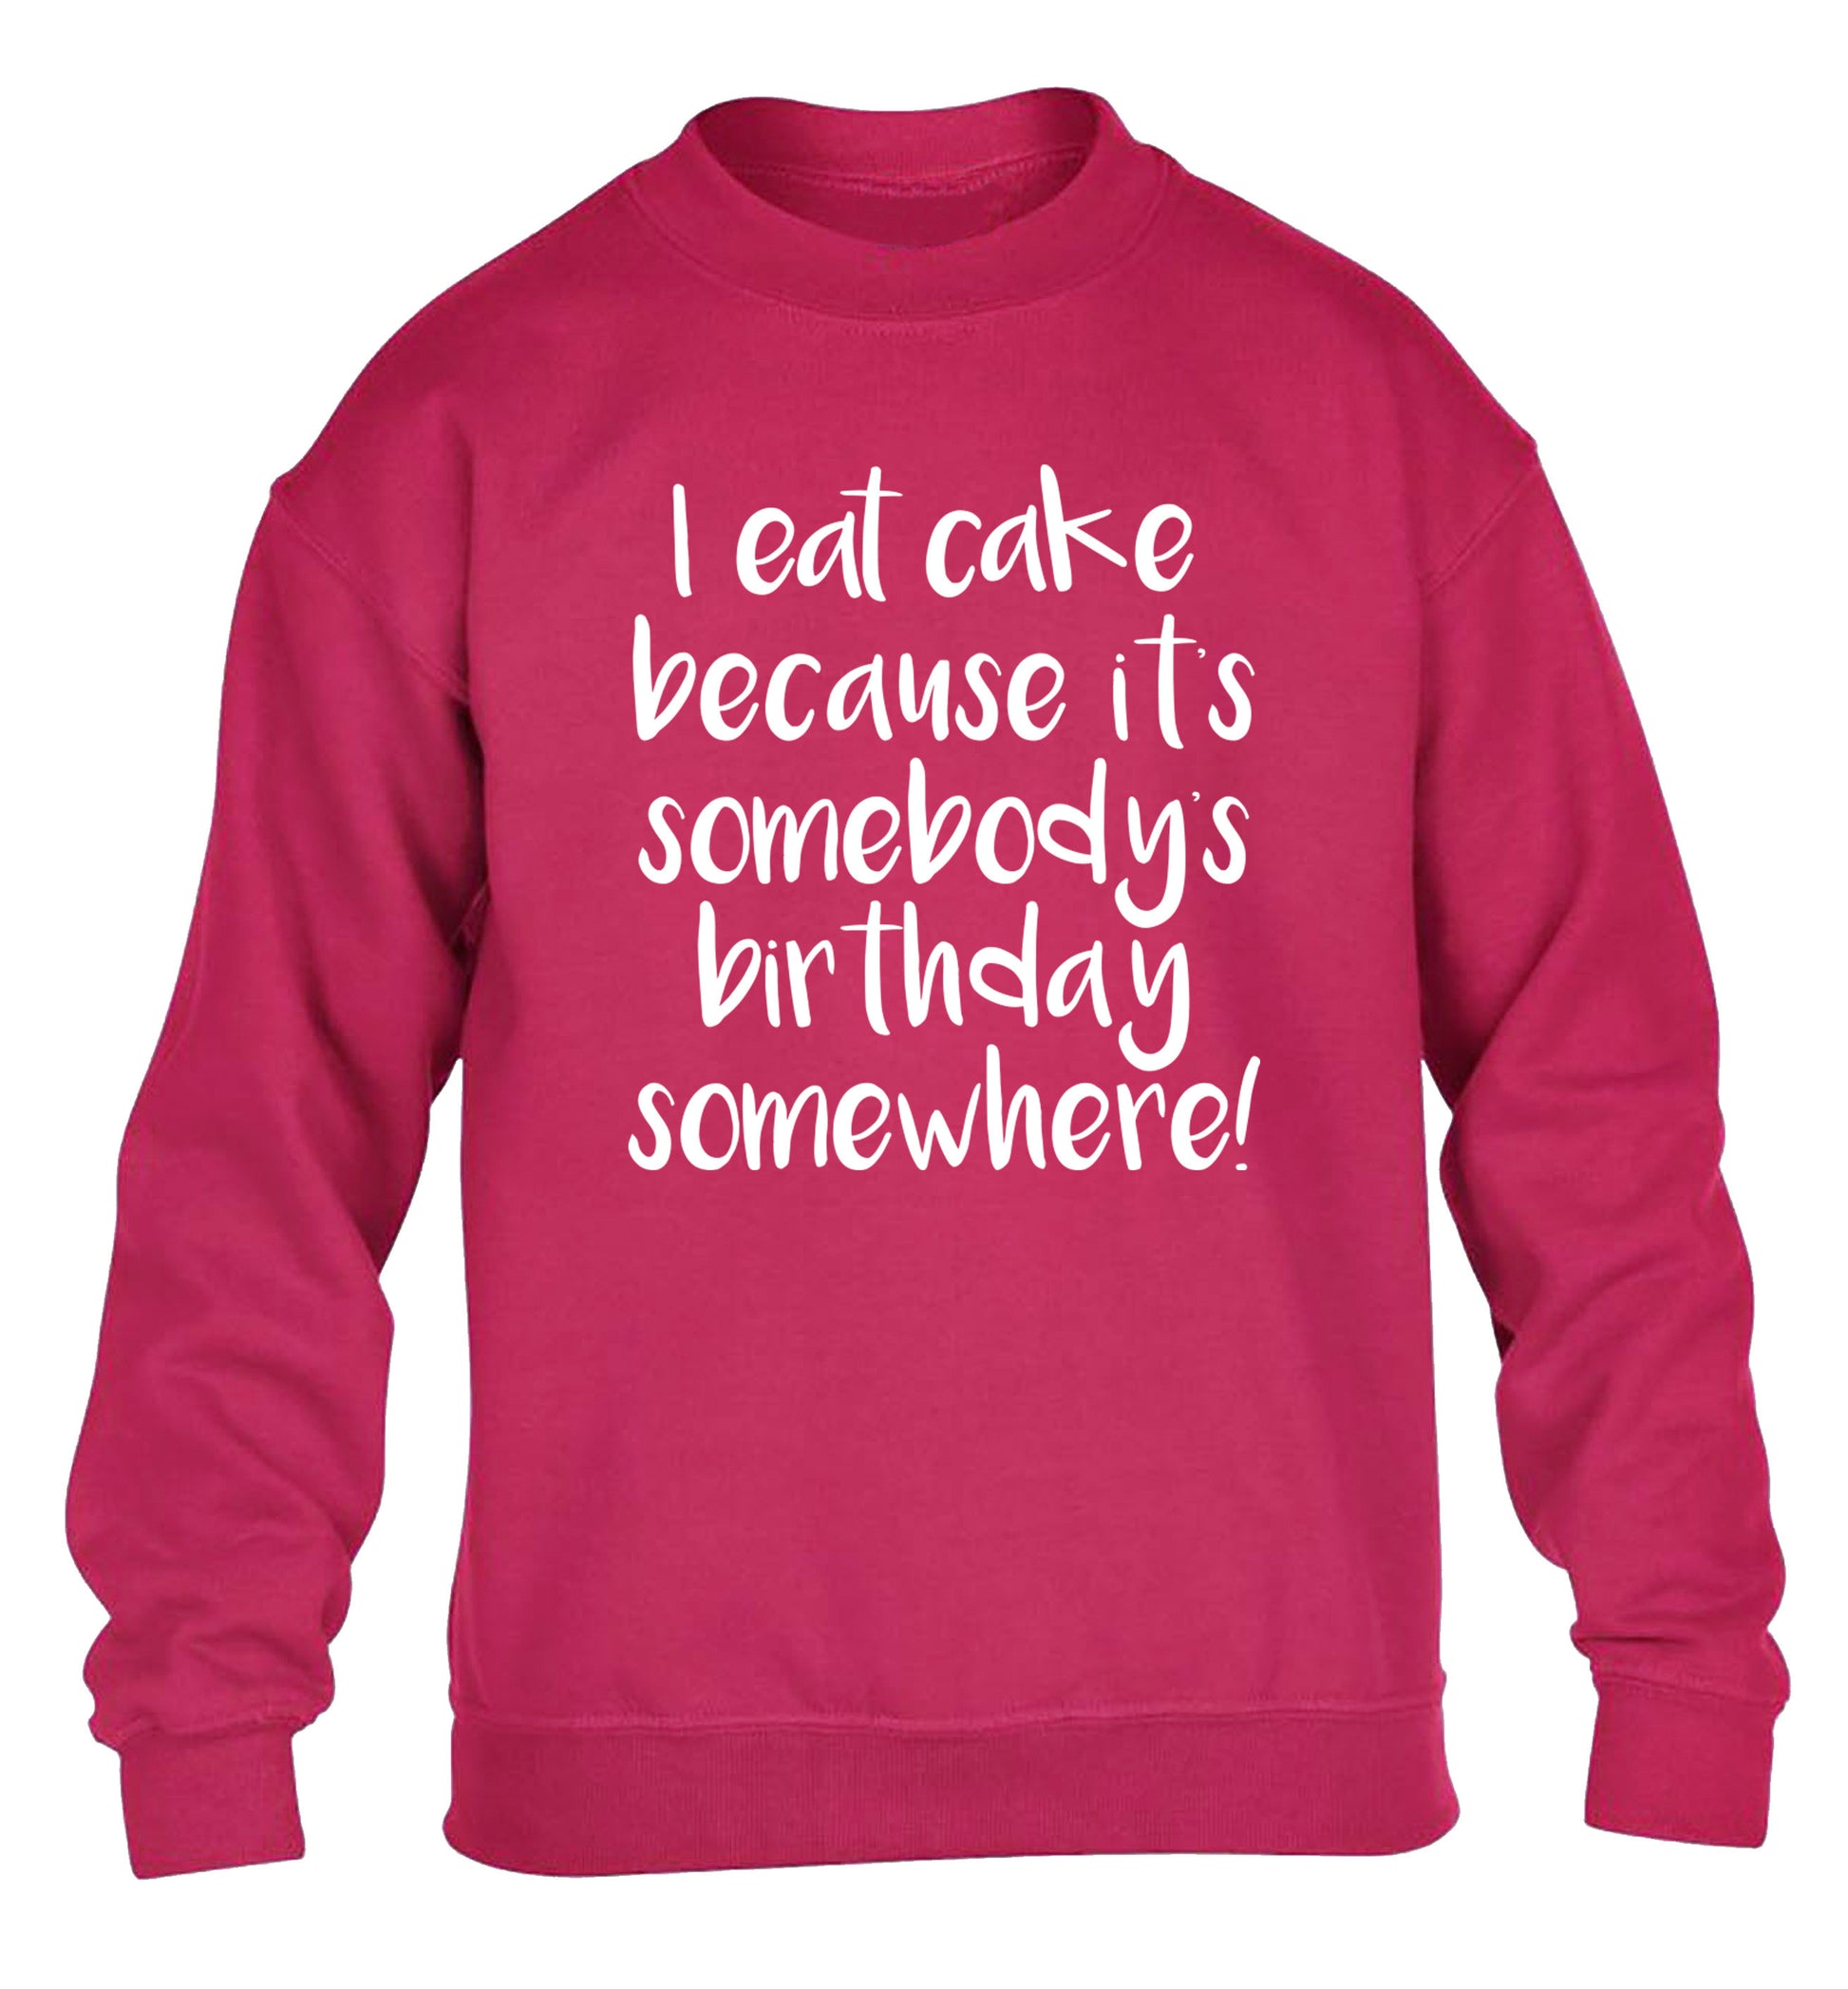 I eat cake because it's somebody's birthday somewhere! children's pink sweater 12-14 Years